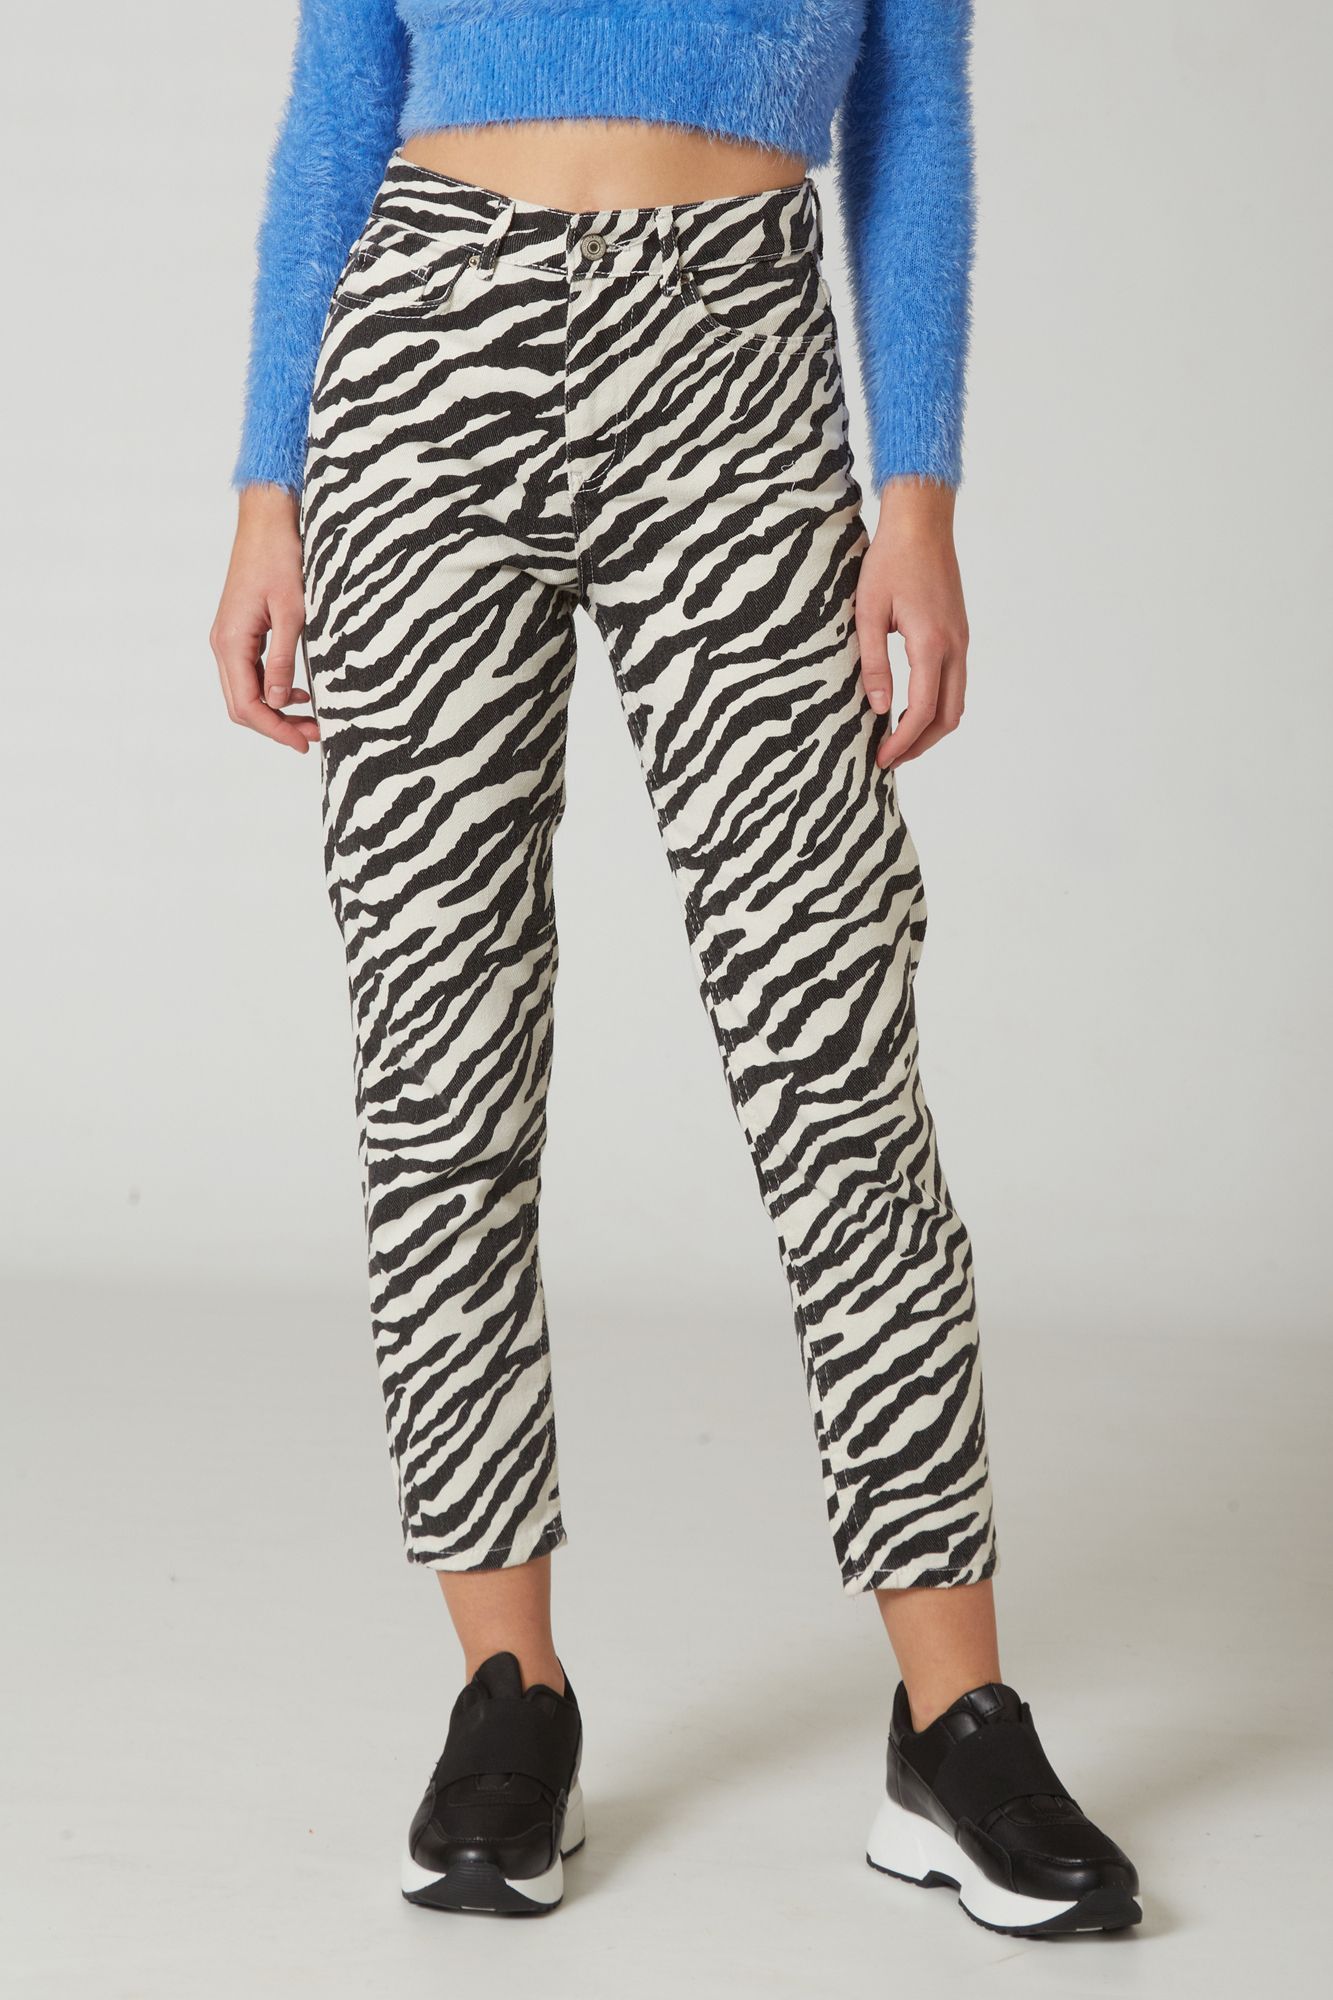 Zebra print pants